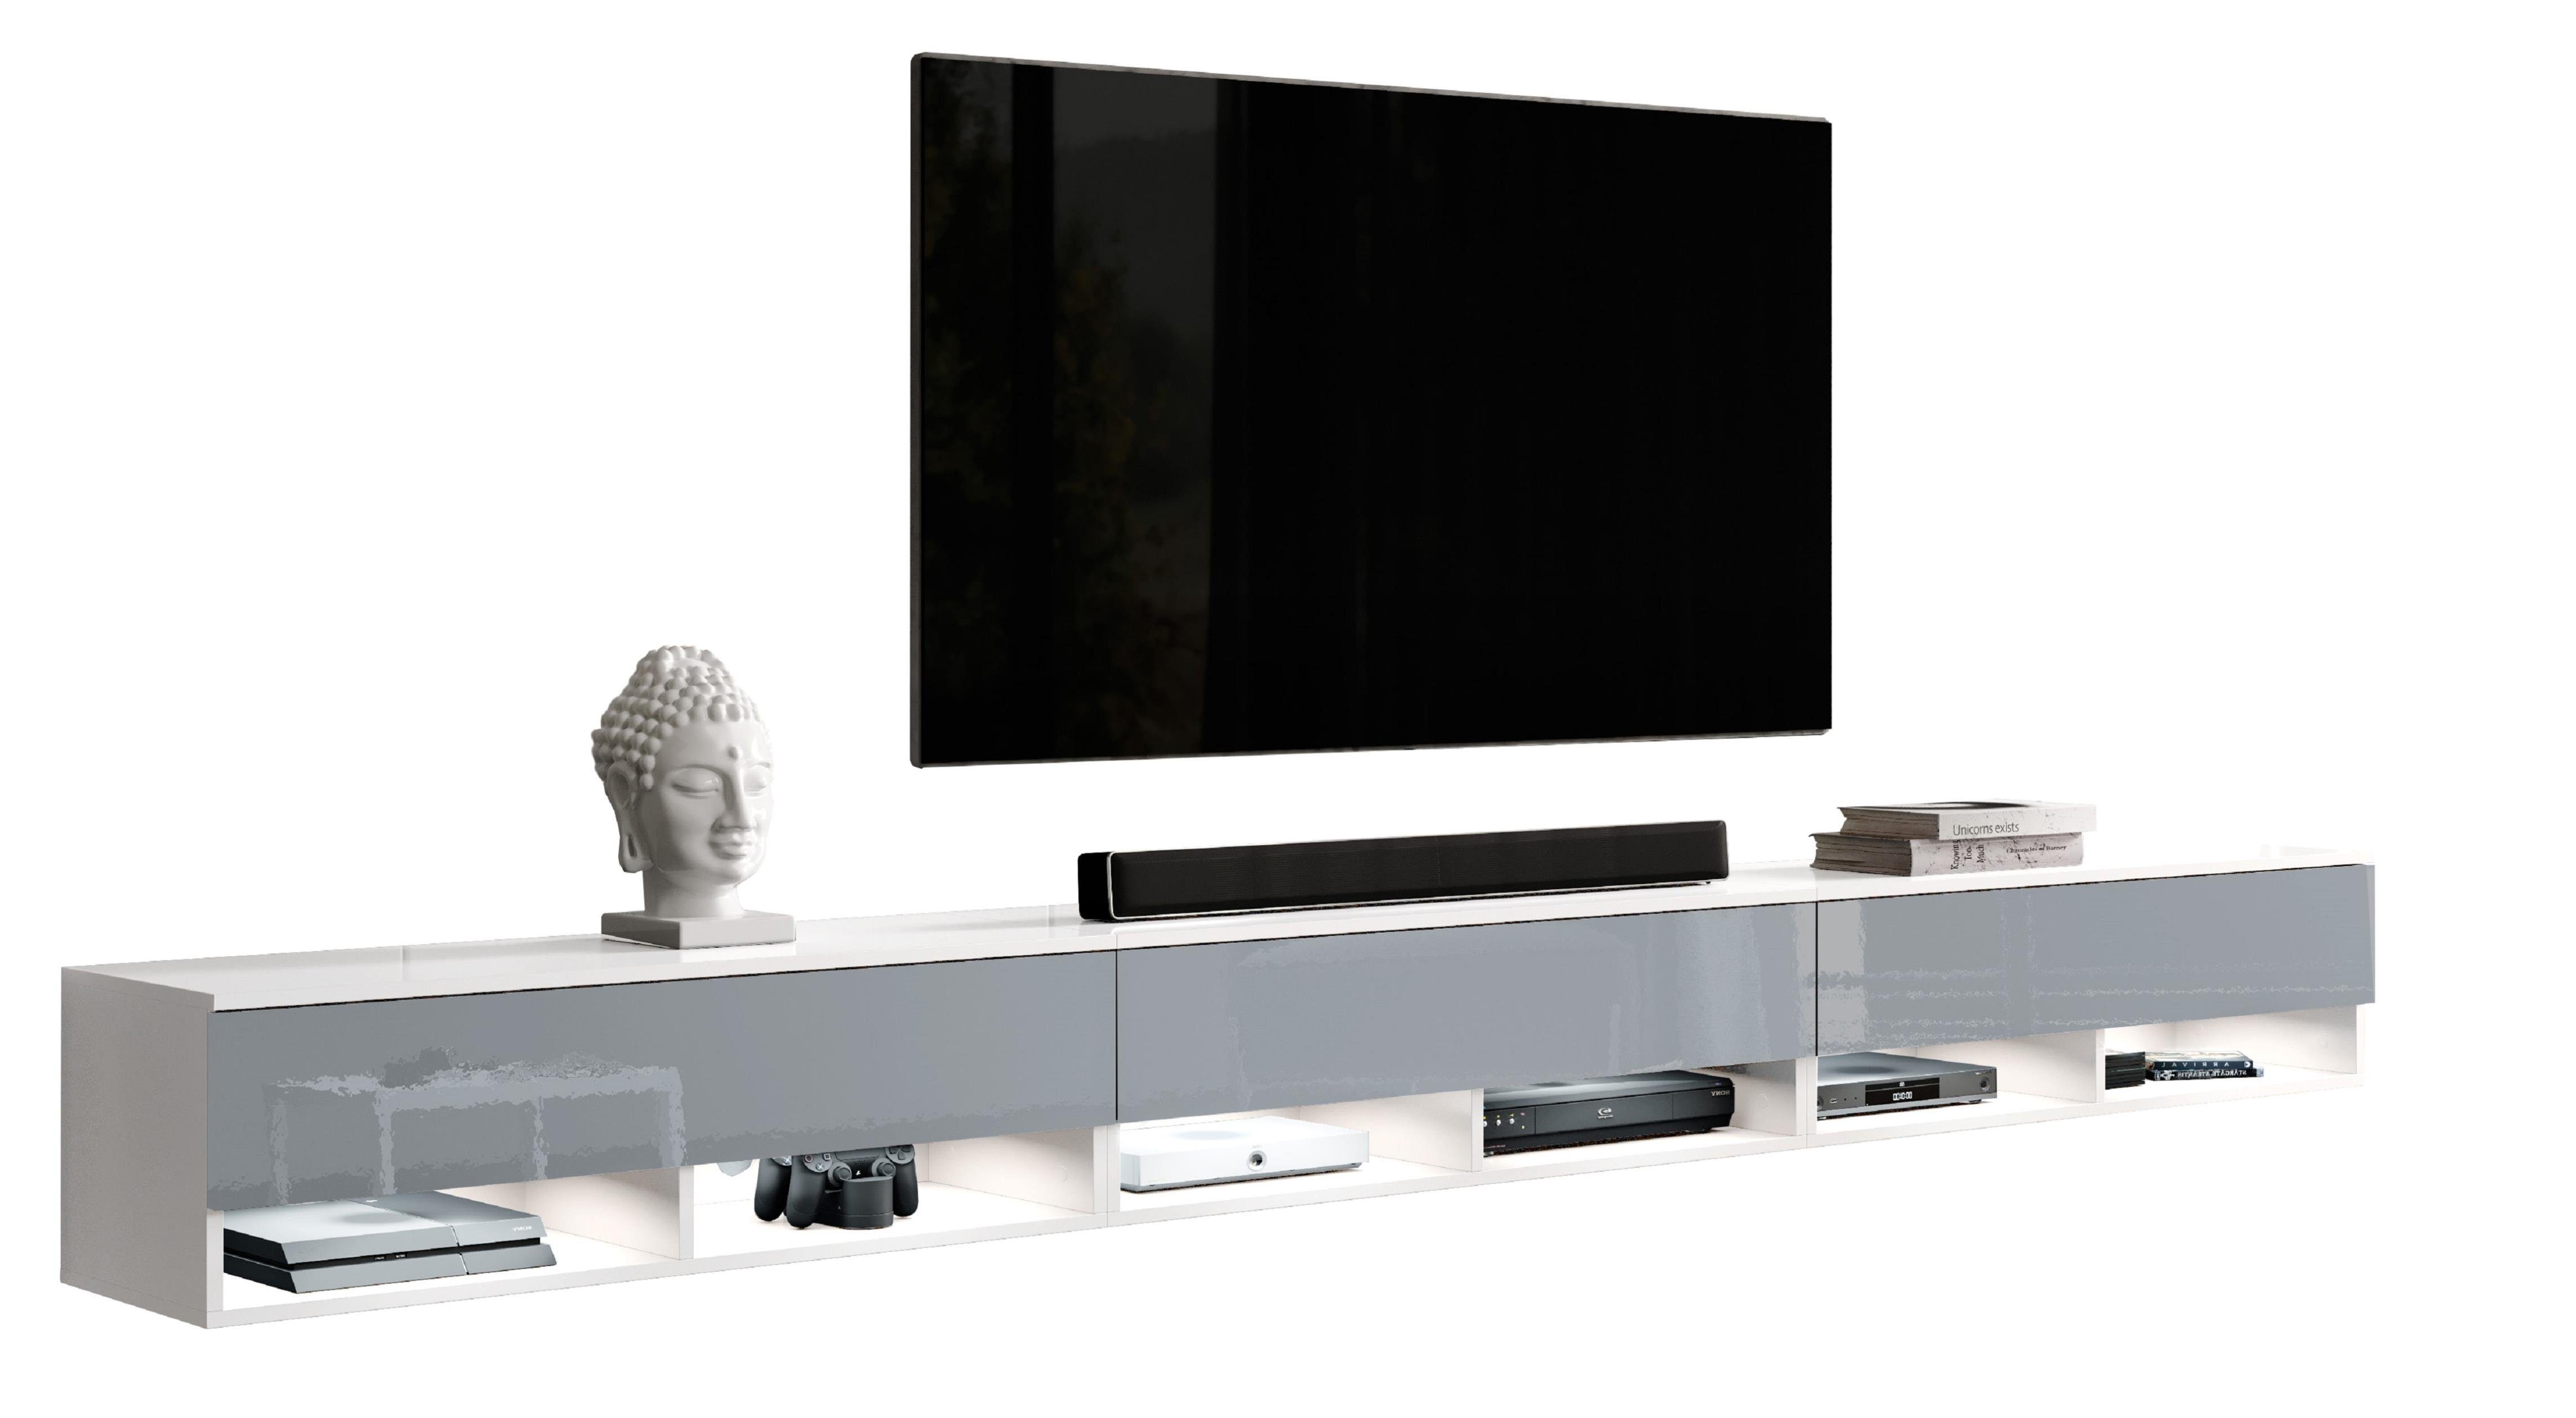 H34 mit Glanz Türen x ohne 3 B300 TV-Schrank Furnix Weiß/Grau LED 300 cm x ALYX TV-Kommode cm Lowboard T32